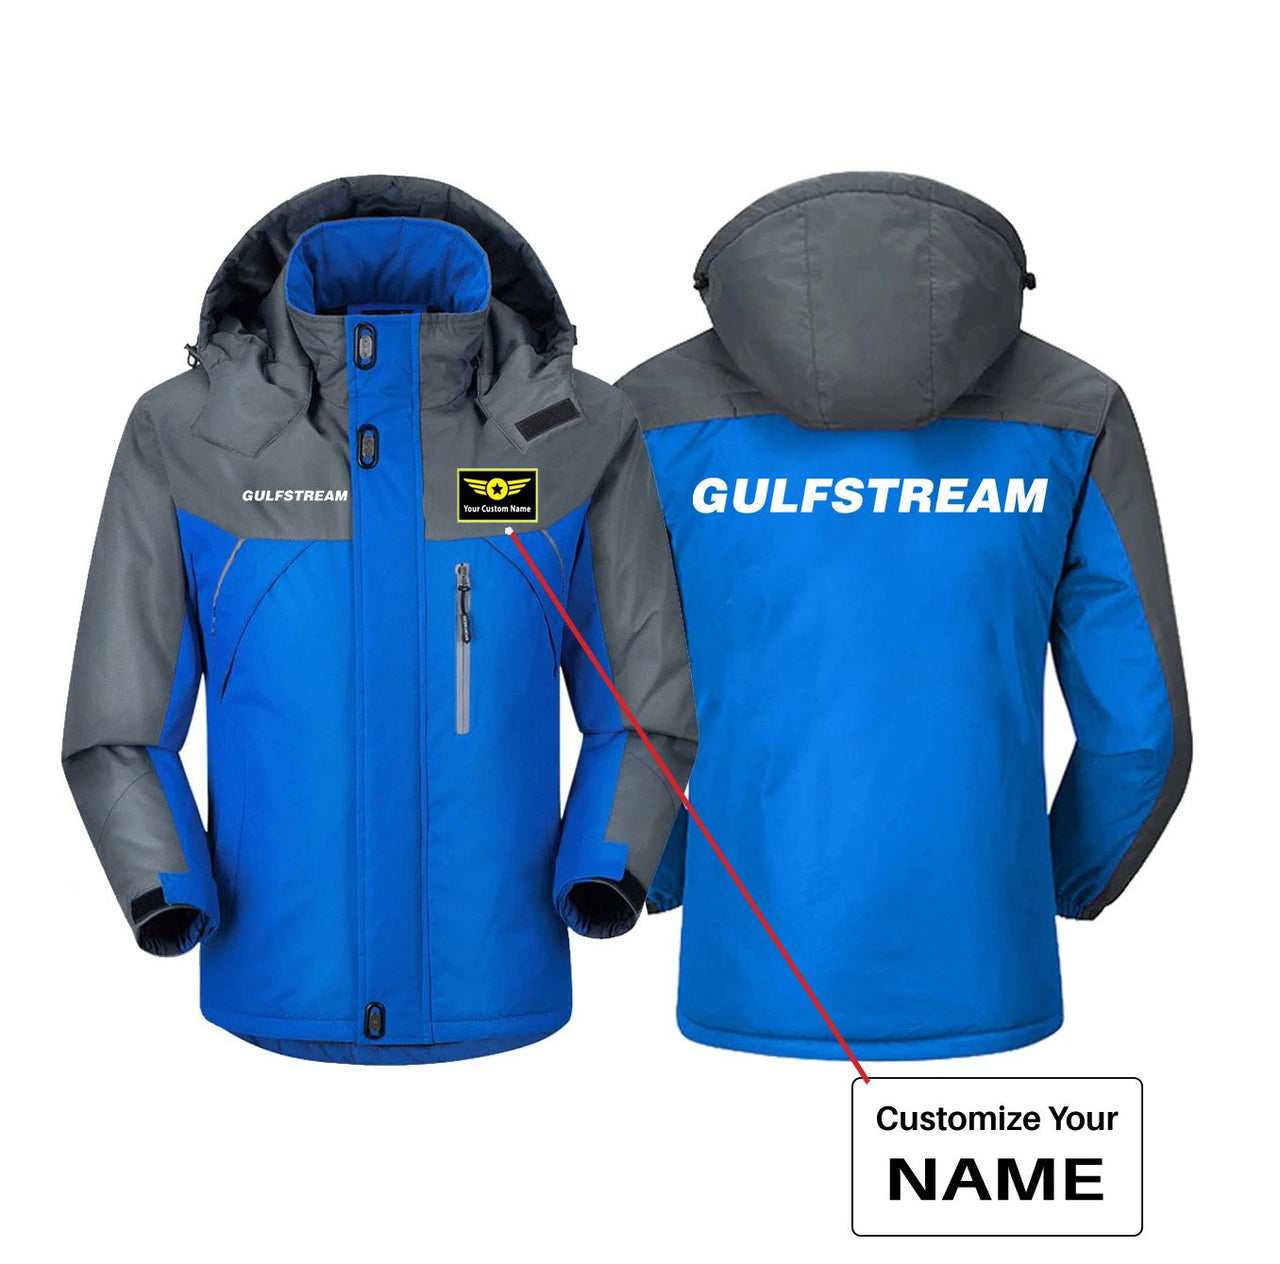 Gulfstream & Text Designed Thick Winter Jackets